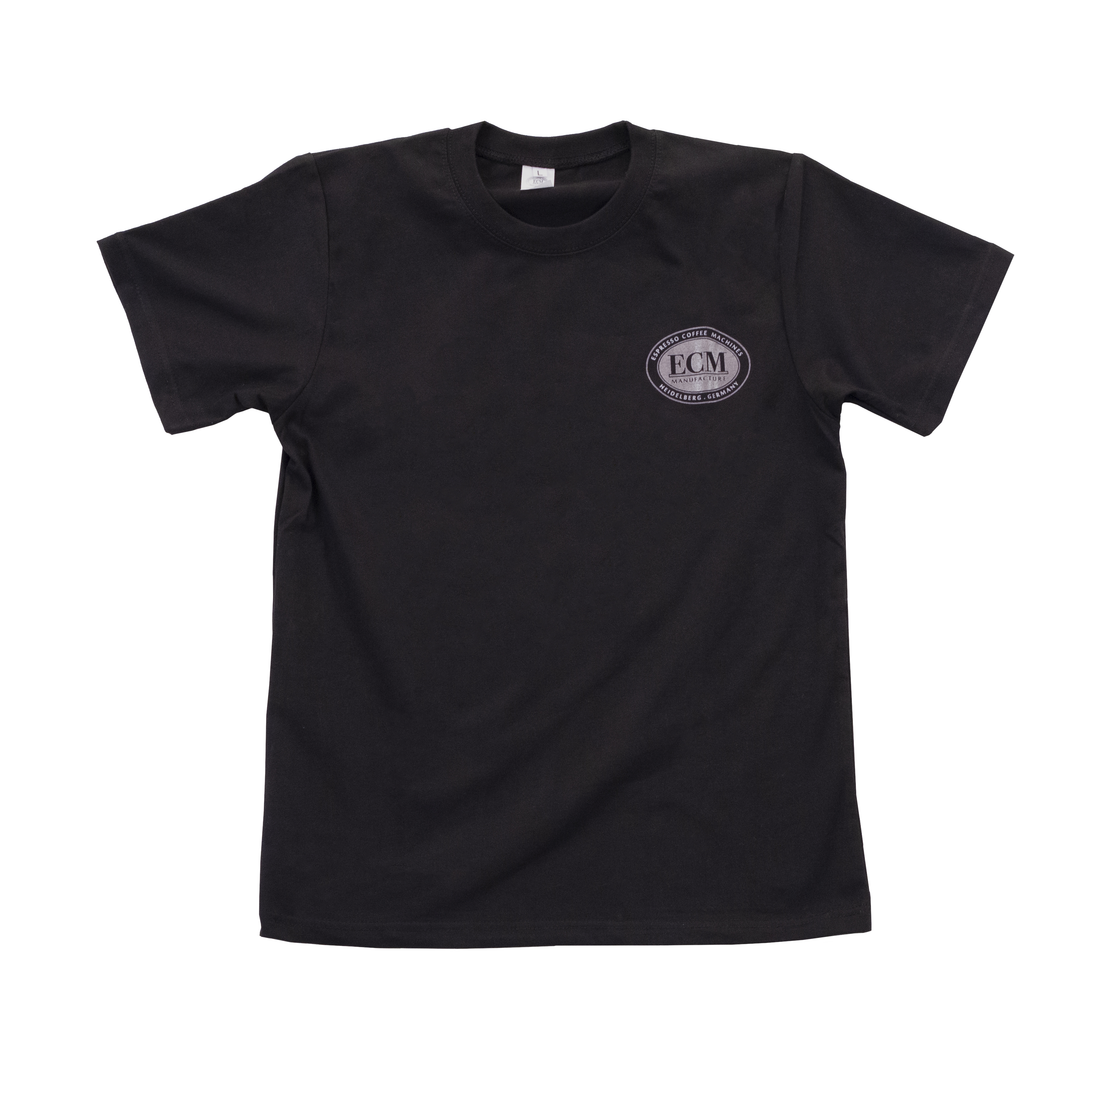 ECM Black Logo T-Shirt - Size XL